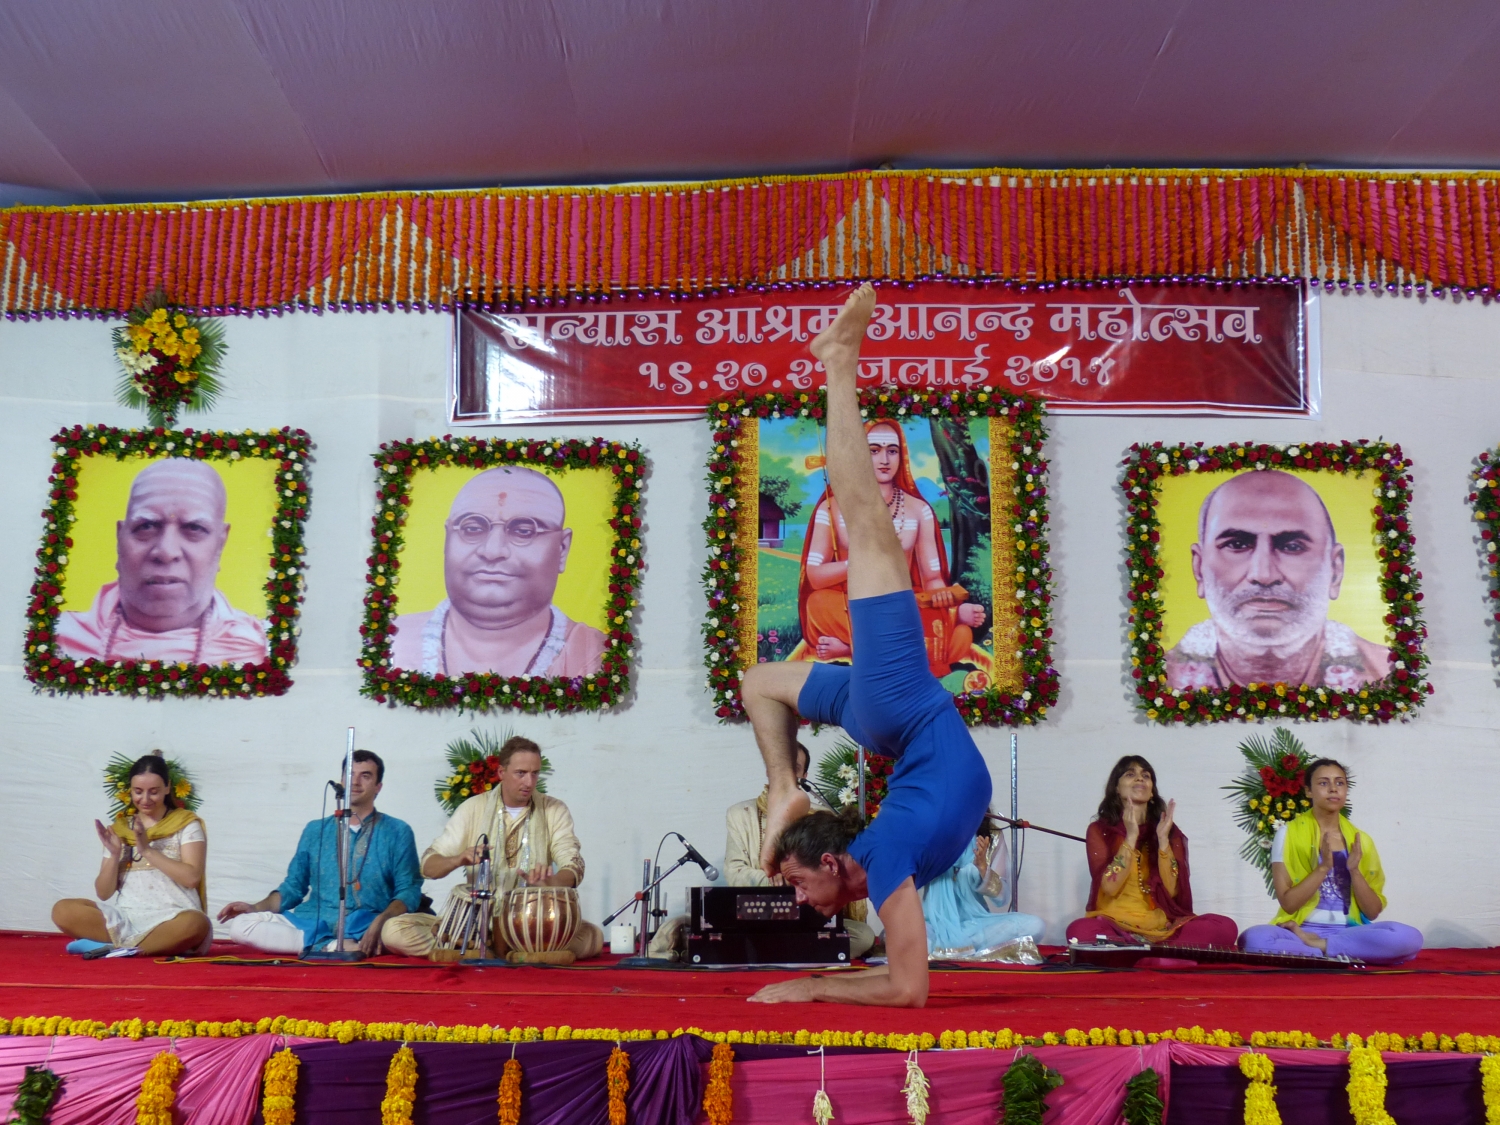 60º Aniversário de Mahá Mandaleshvara H.H. Vishveshvaránanda Giri Jí Mahá Rája - Sanyasa Áshrama, Mumbai, Índia - 2014, Julho